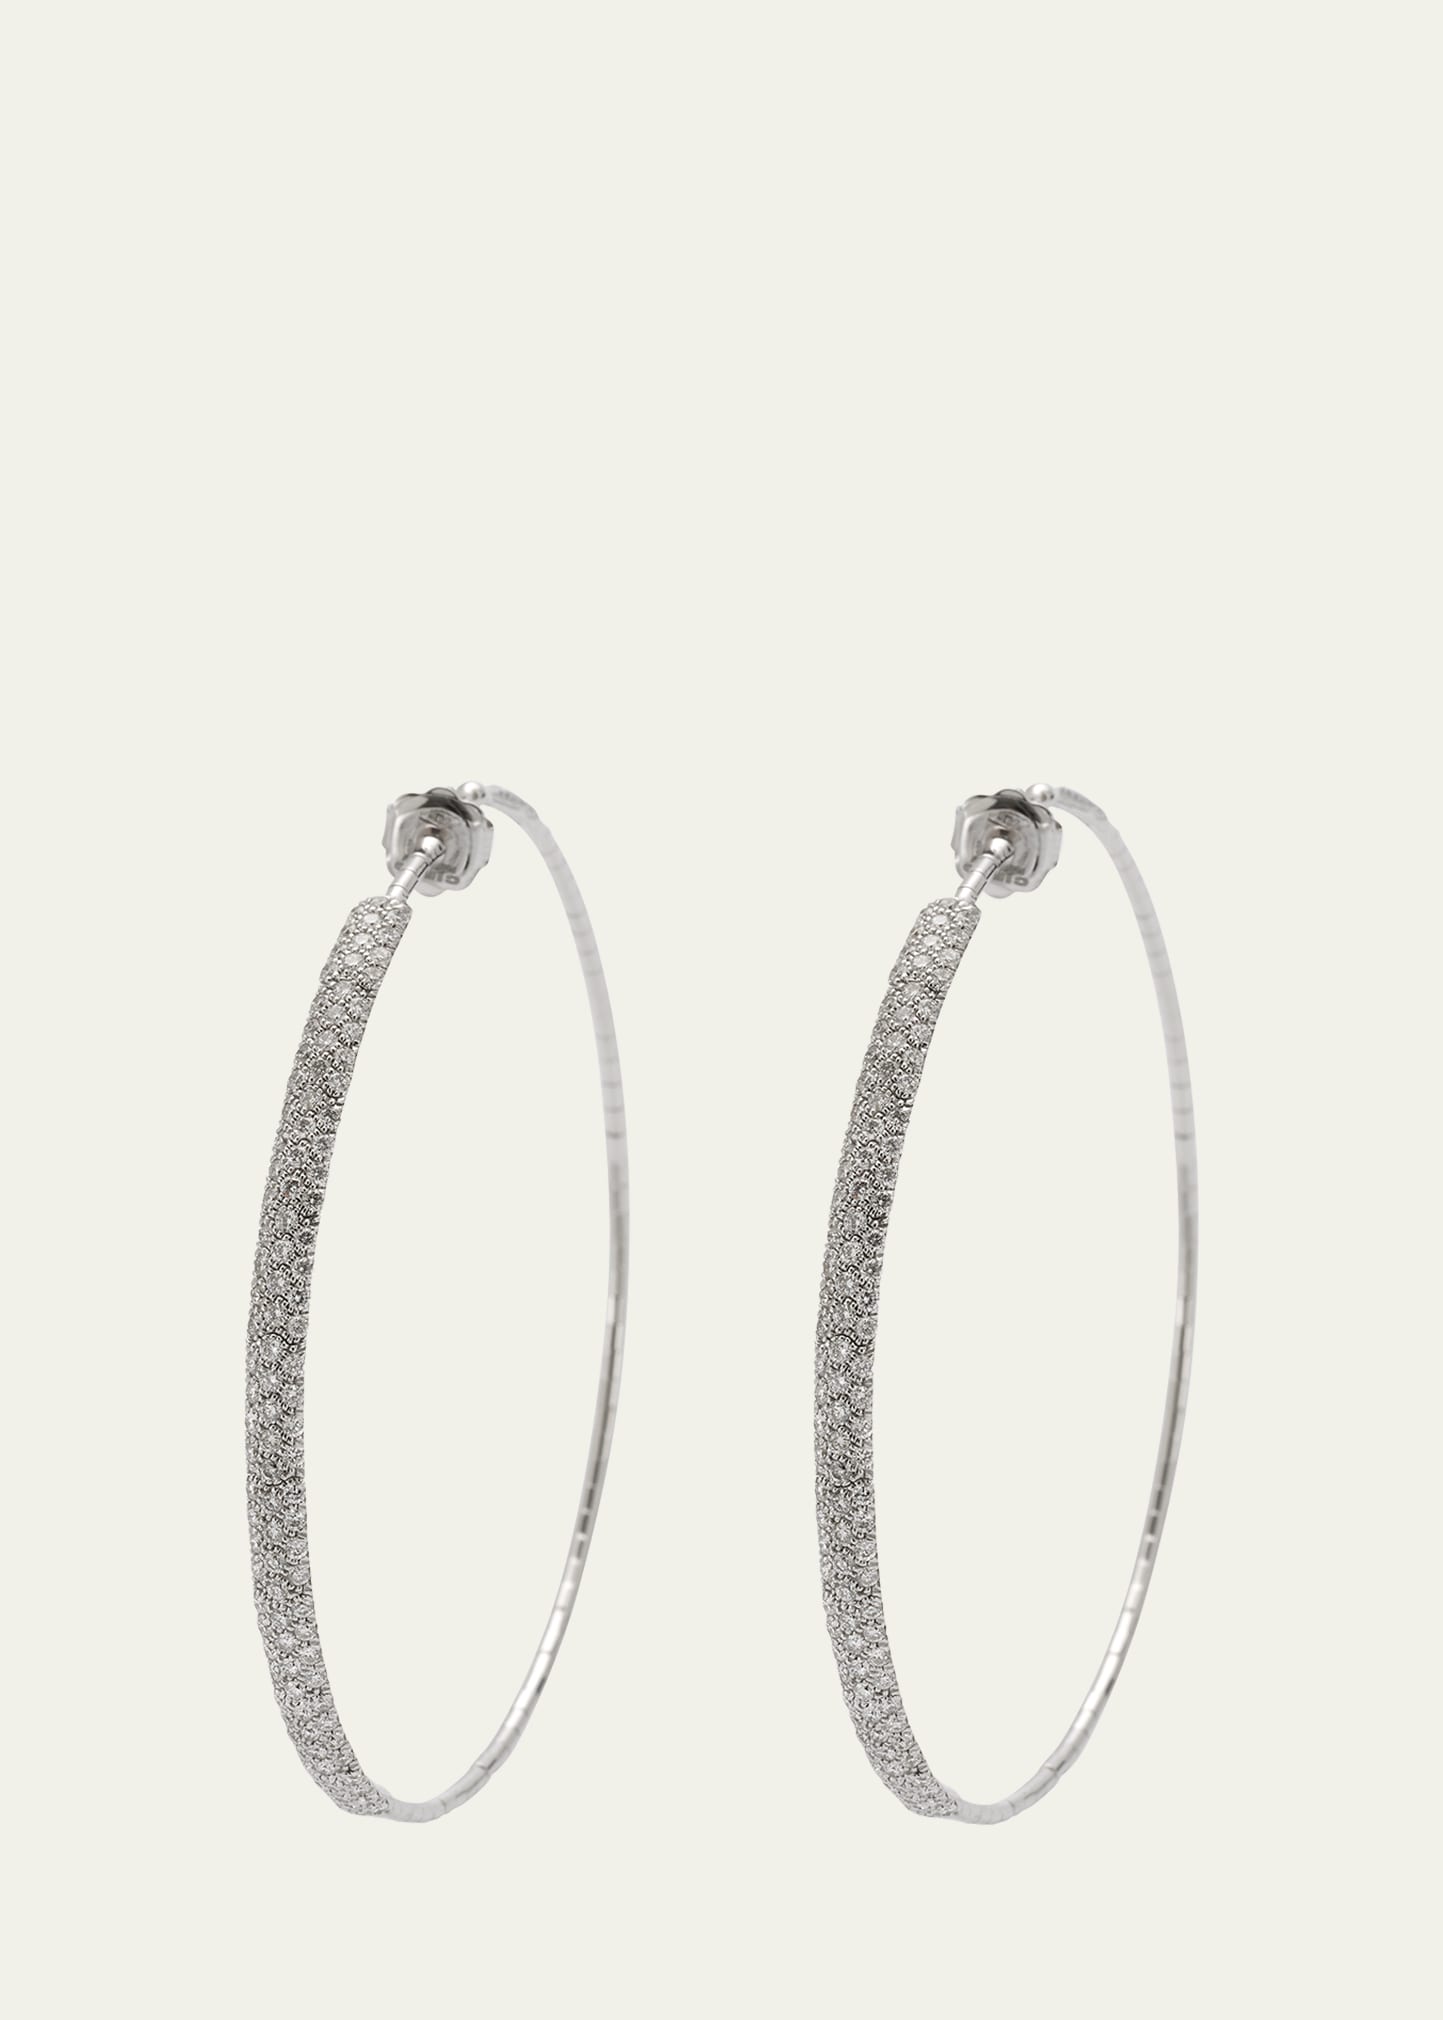 Mattia Cielo White Gold and Titanium Hoop Earrings with Diamonds